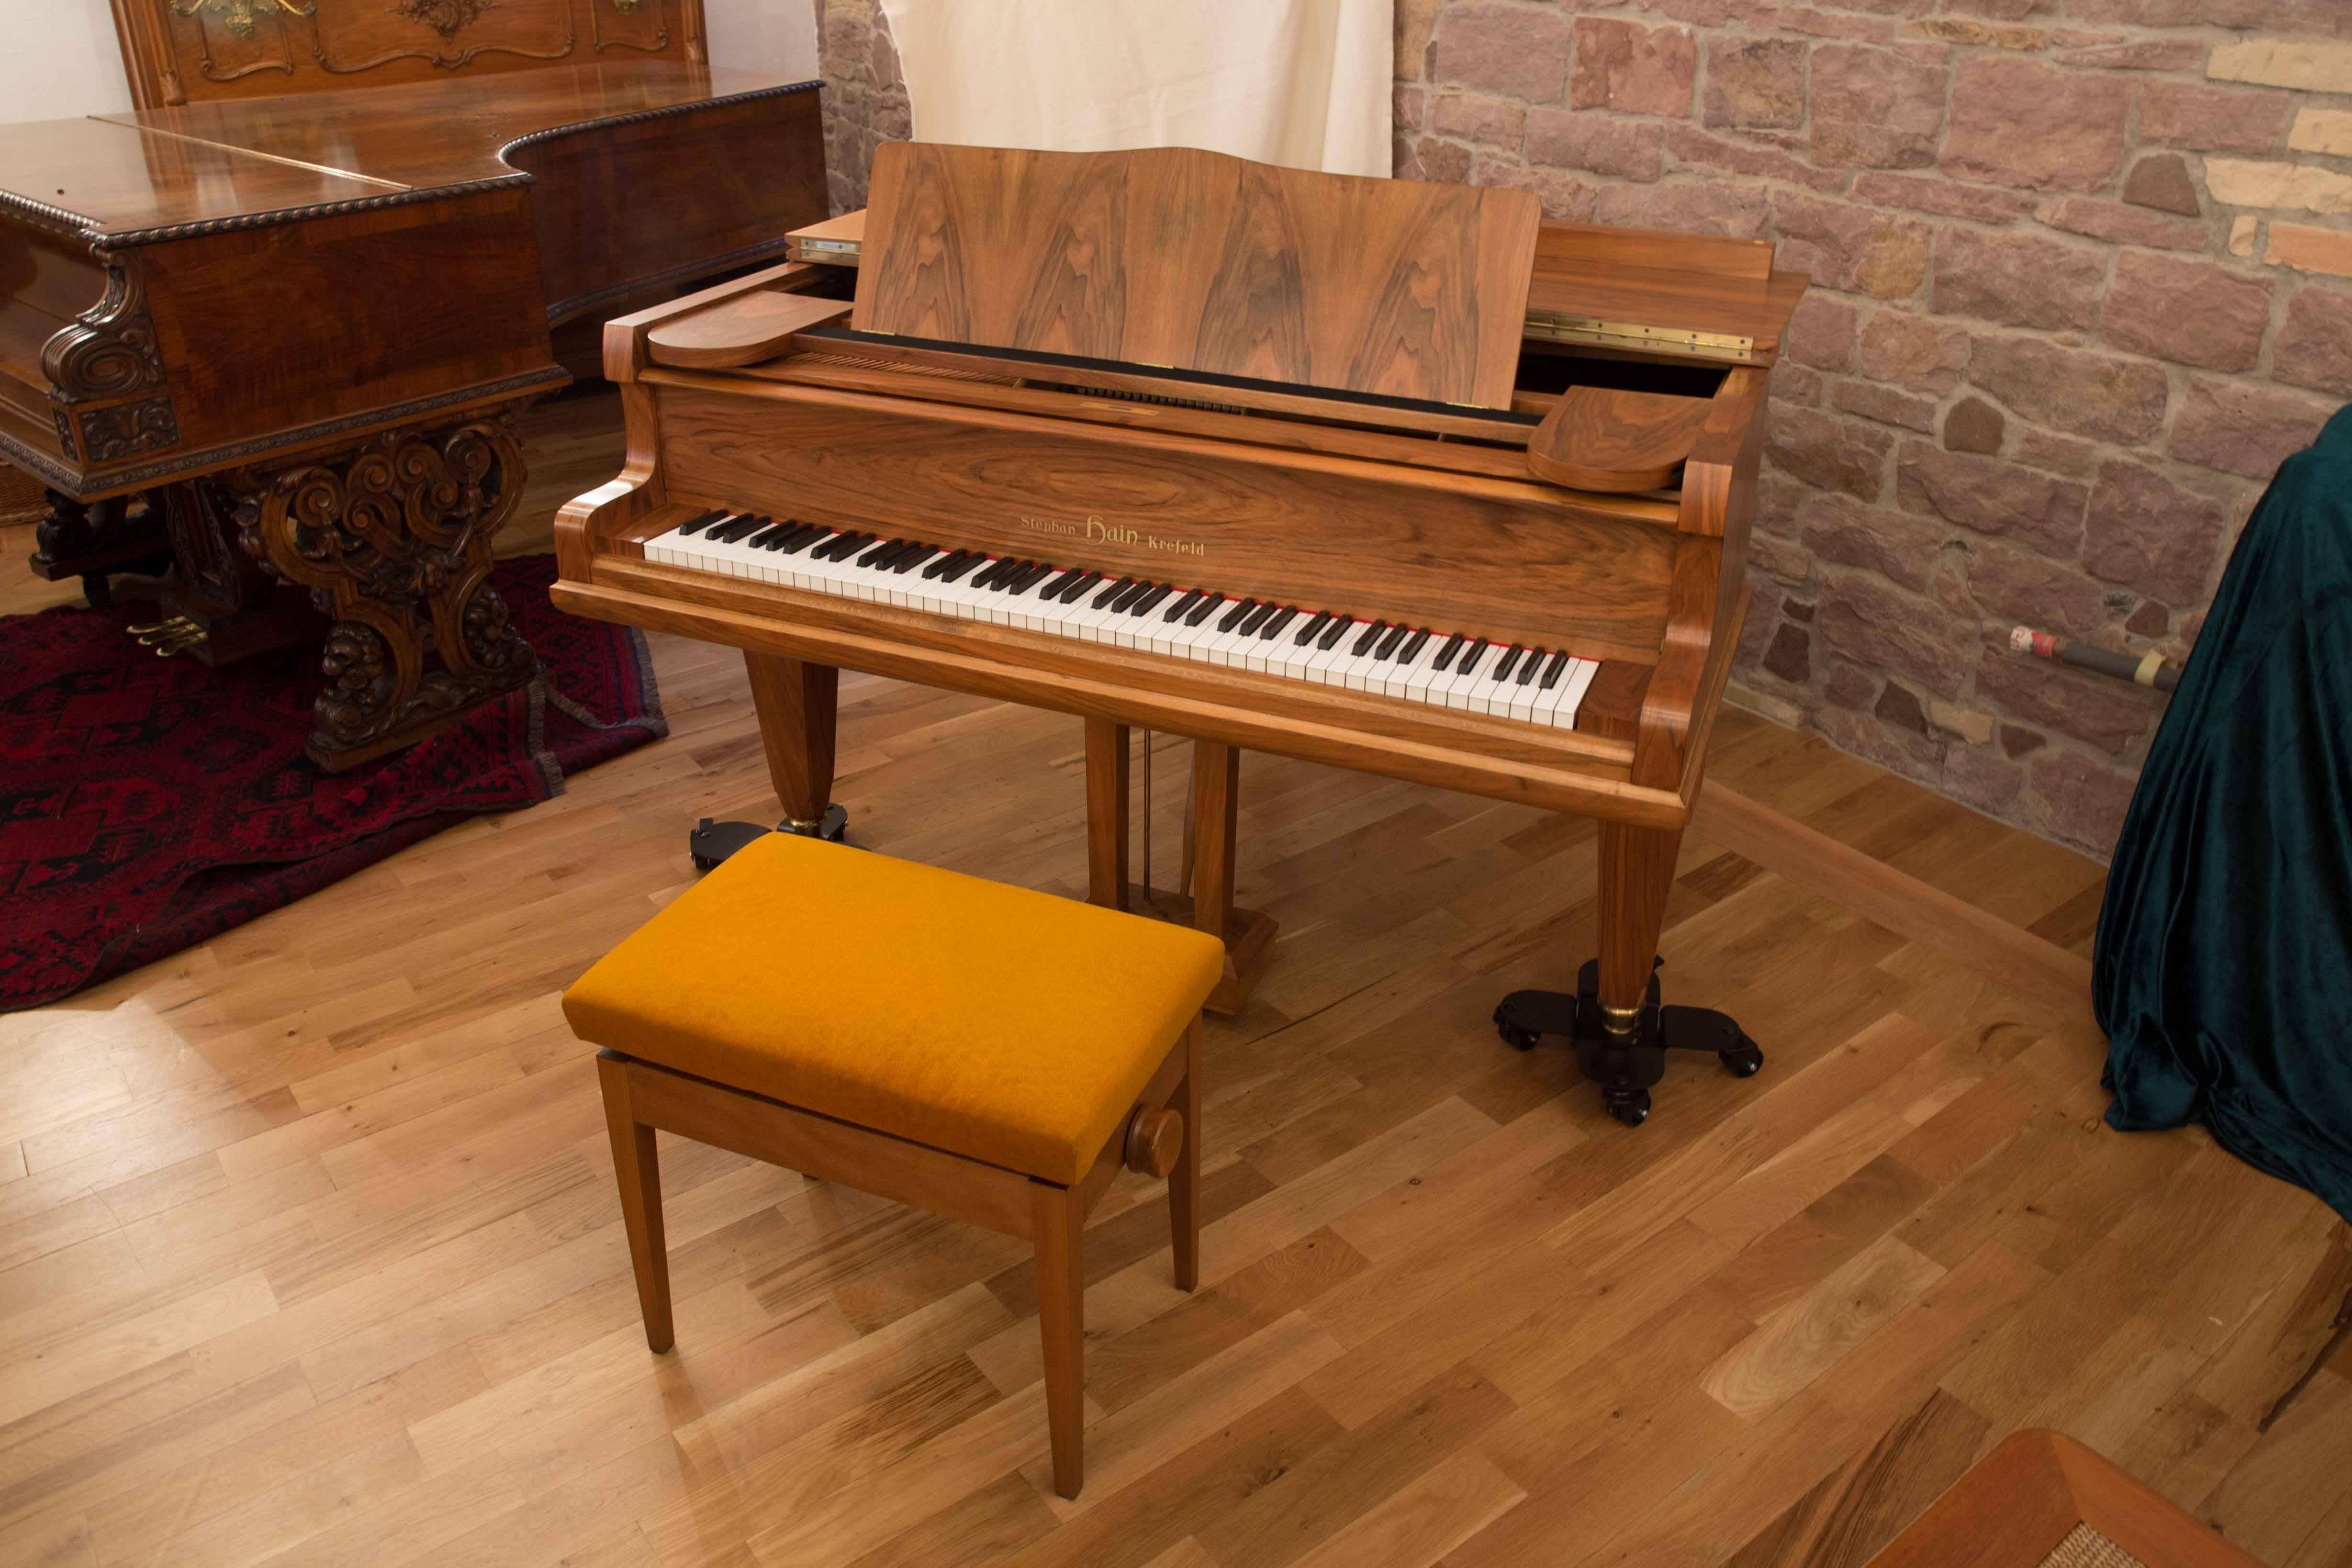 20th Century German Parlour Baby Grand Piano 1960s Mid-Century Modern Walnut Satin Case